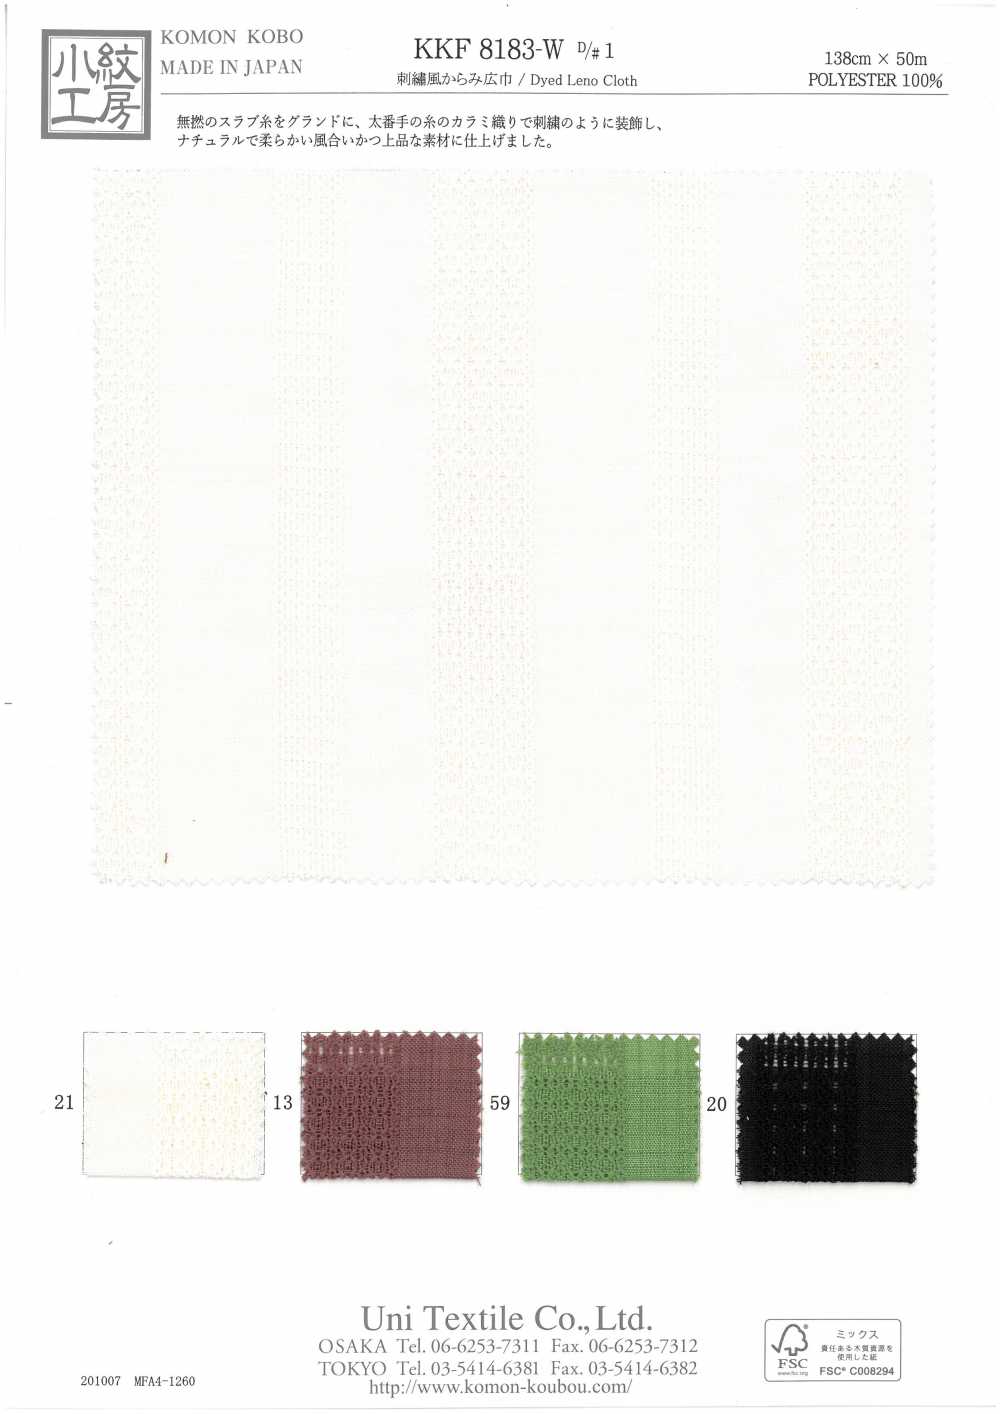 KKF8183-W-D/1 Kiểu Thêu Khổ Rộng[Vải] Uni Textile